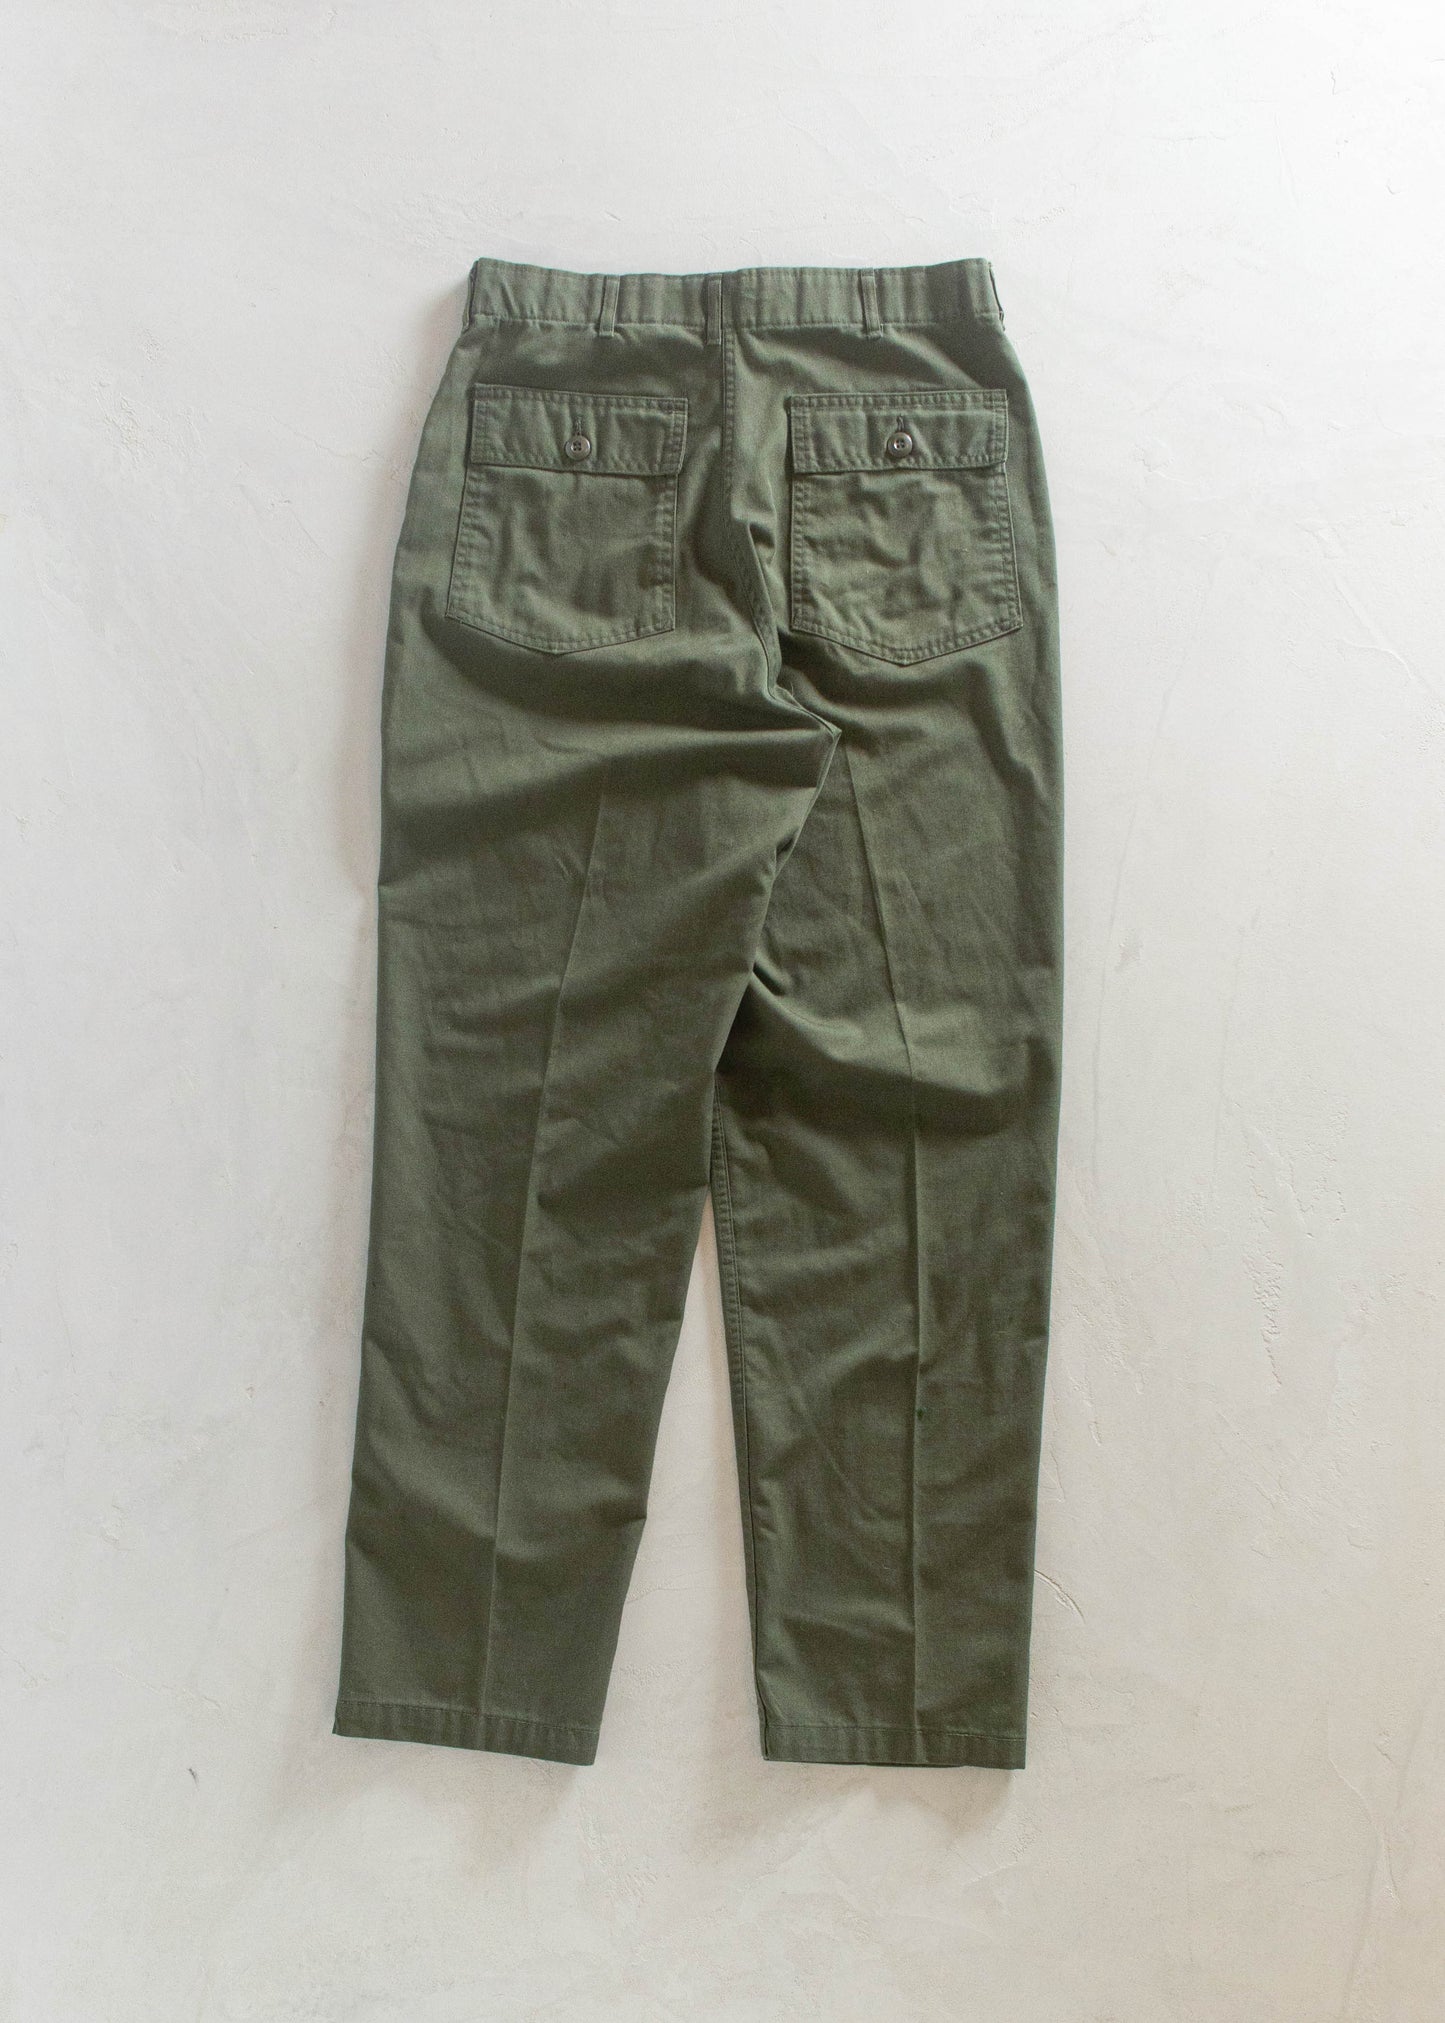 1980s OG 507 Type I Fatigue Pants Size Women's 29 Men's 32